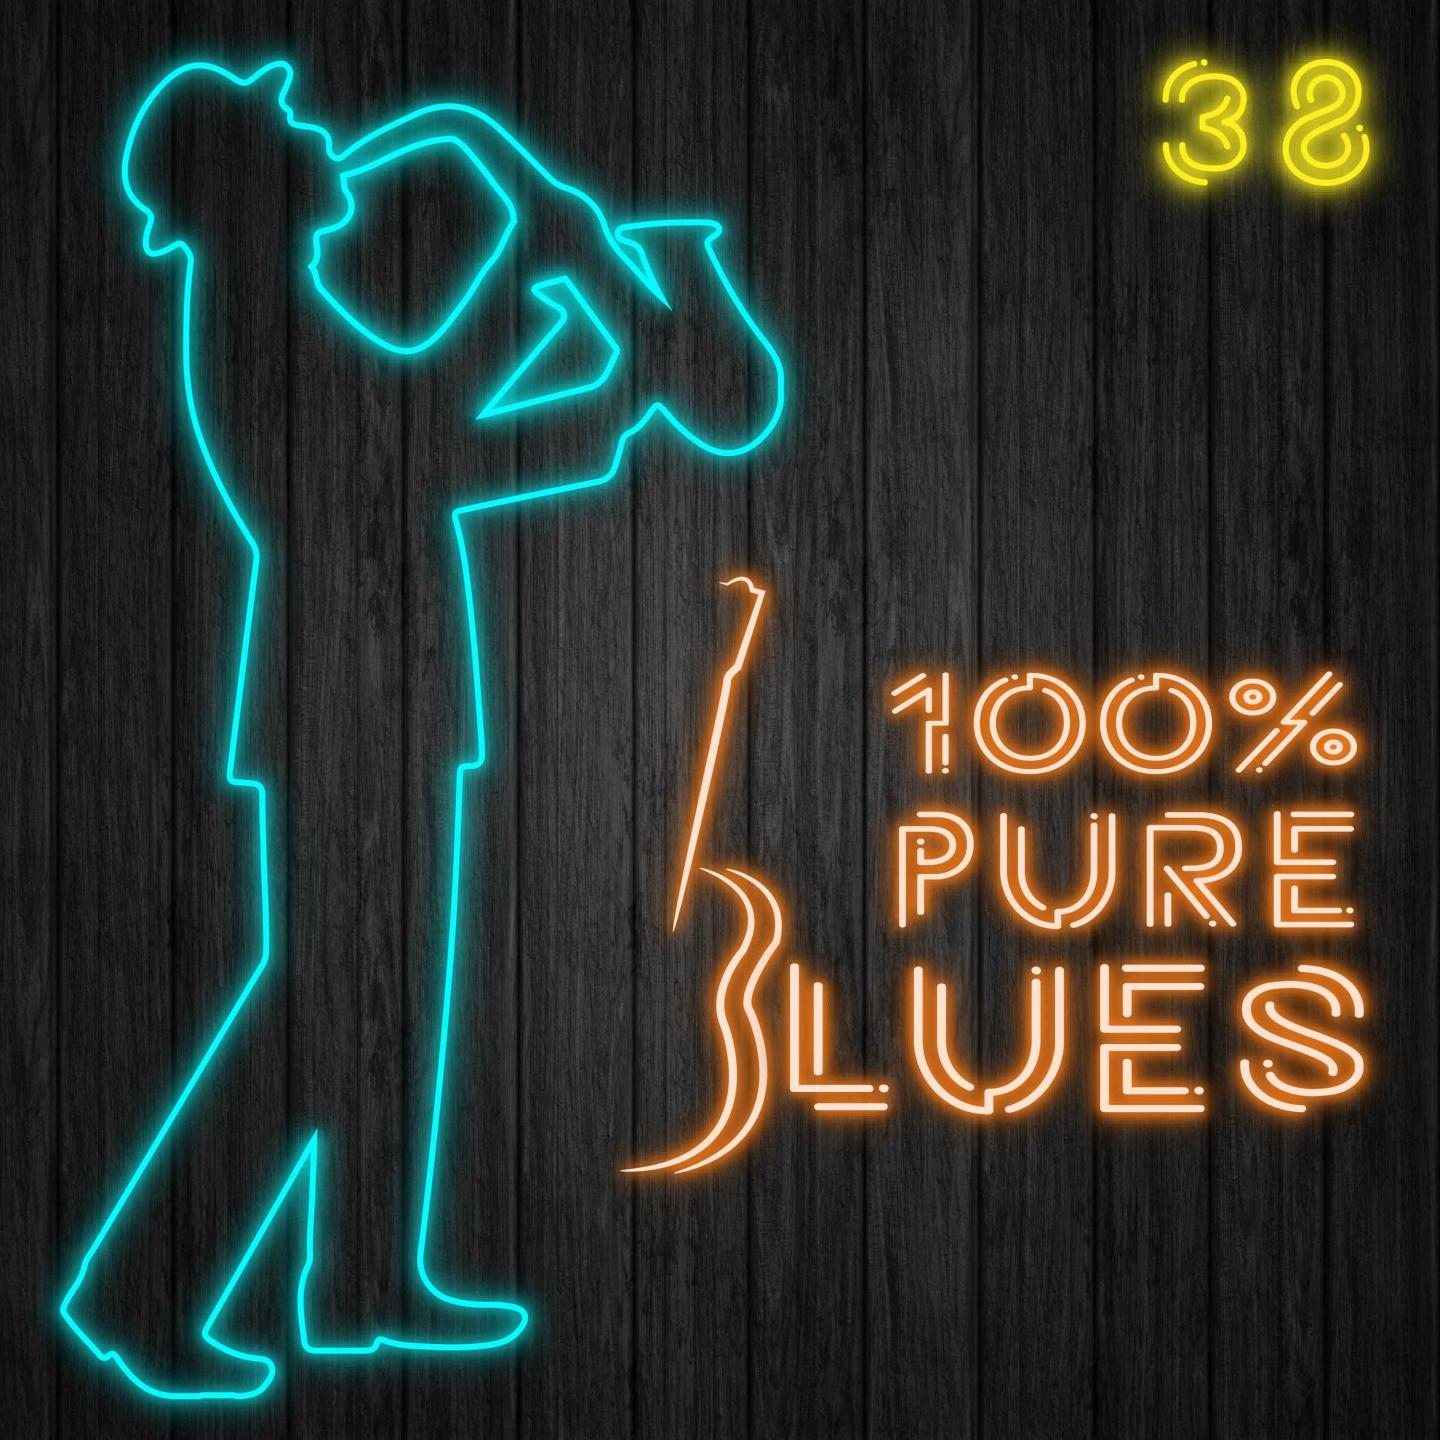 100% Pure Blues / 38